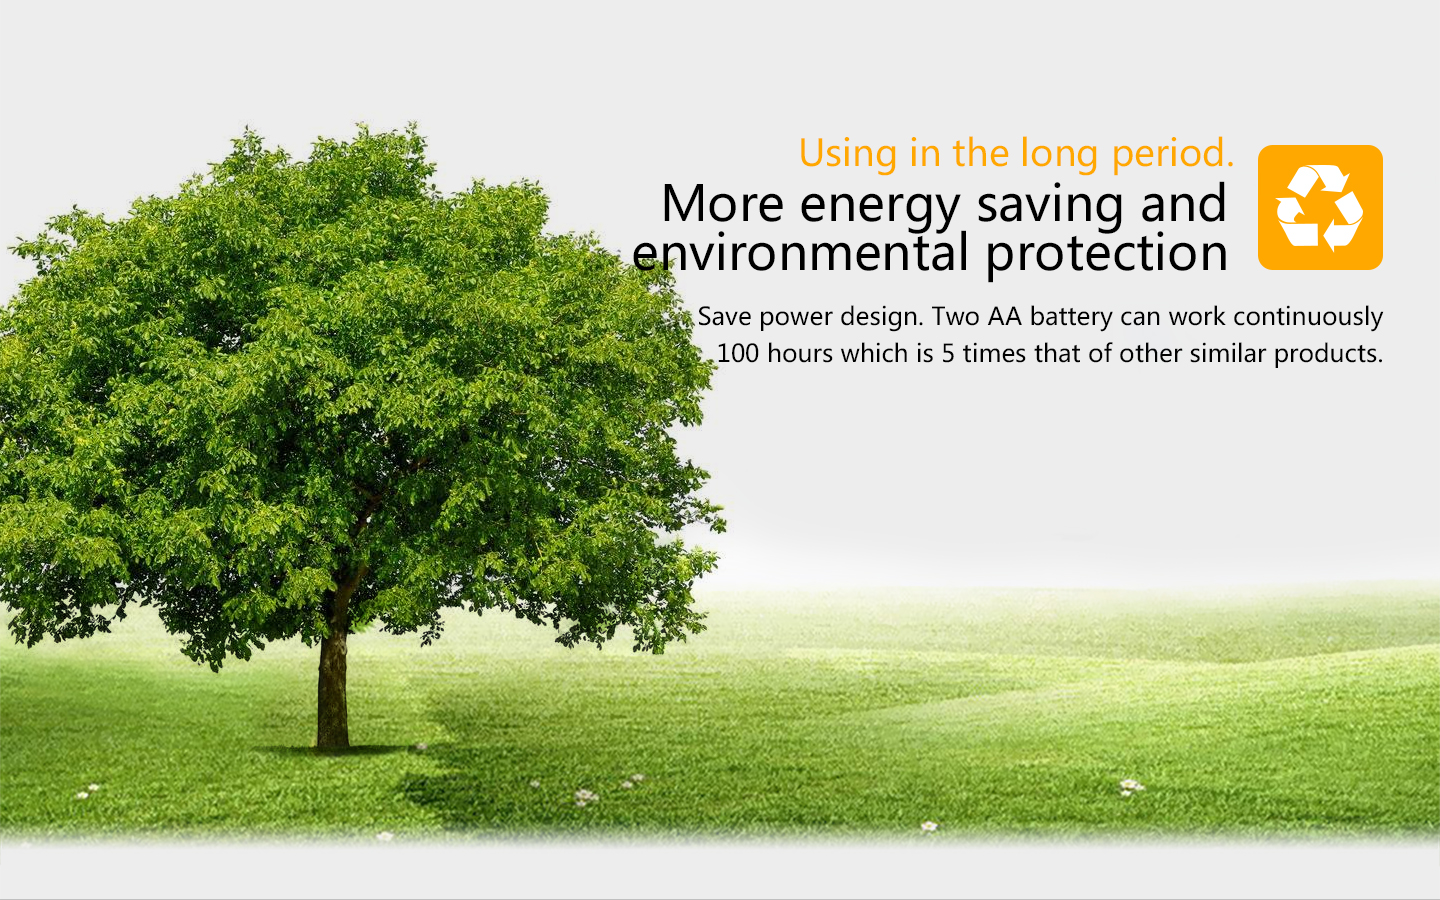 More energy saving and environmental protection